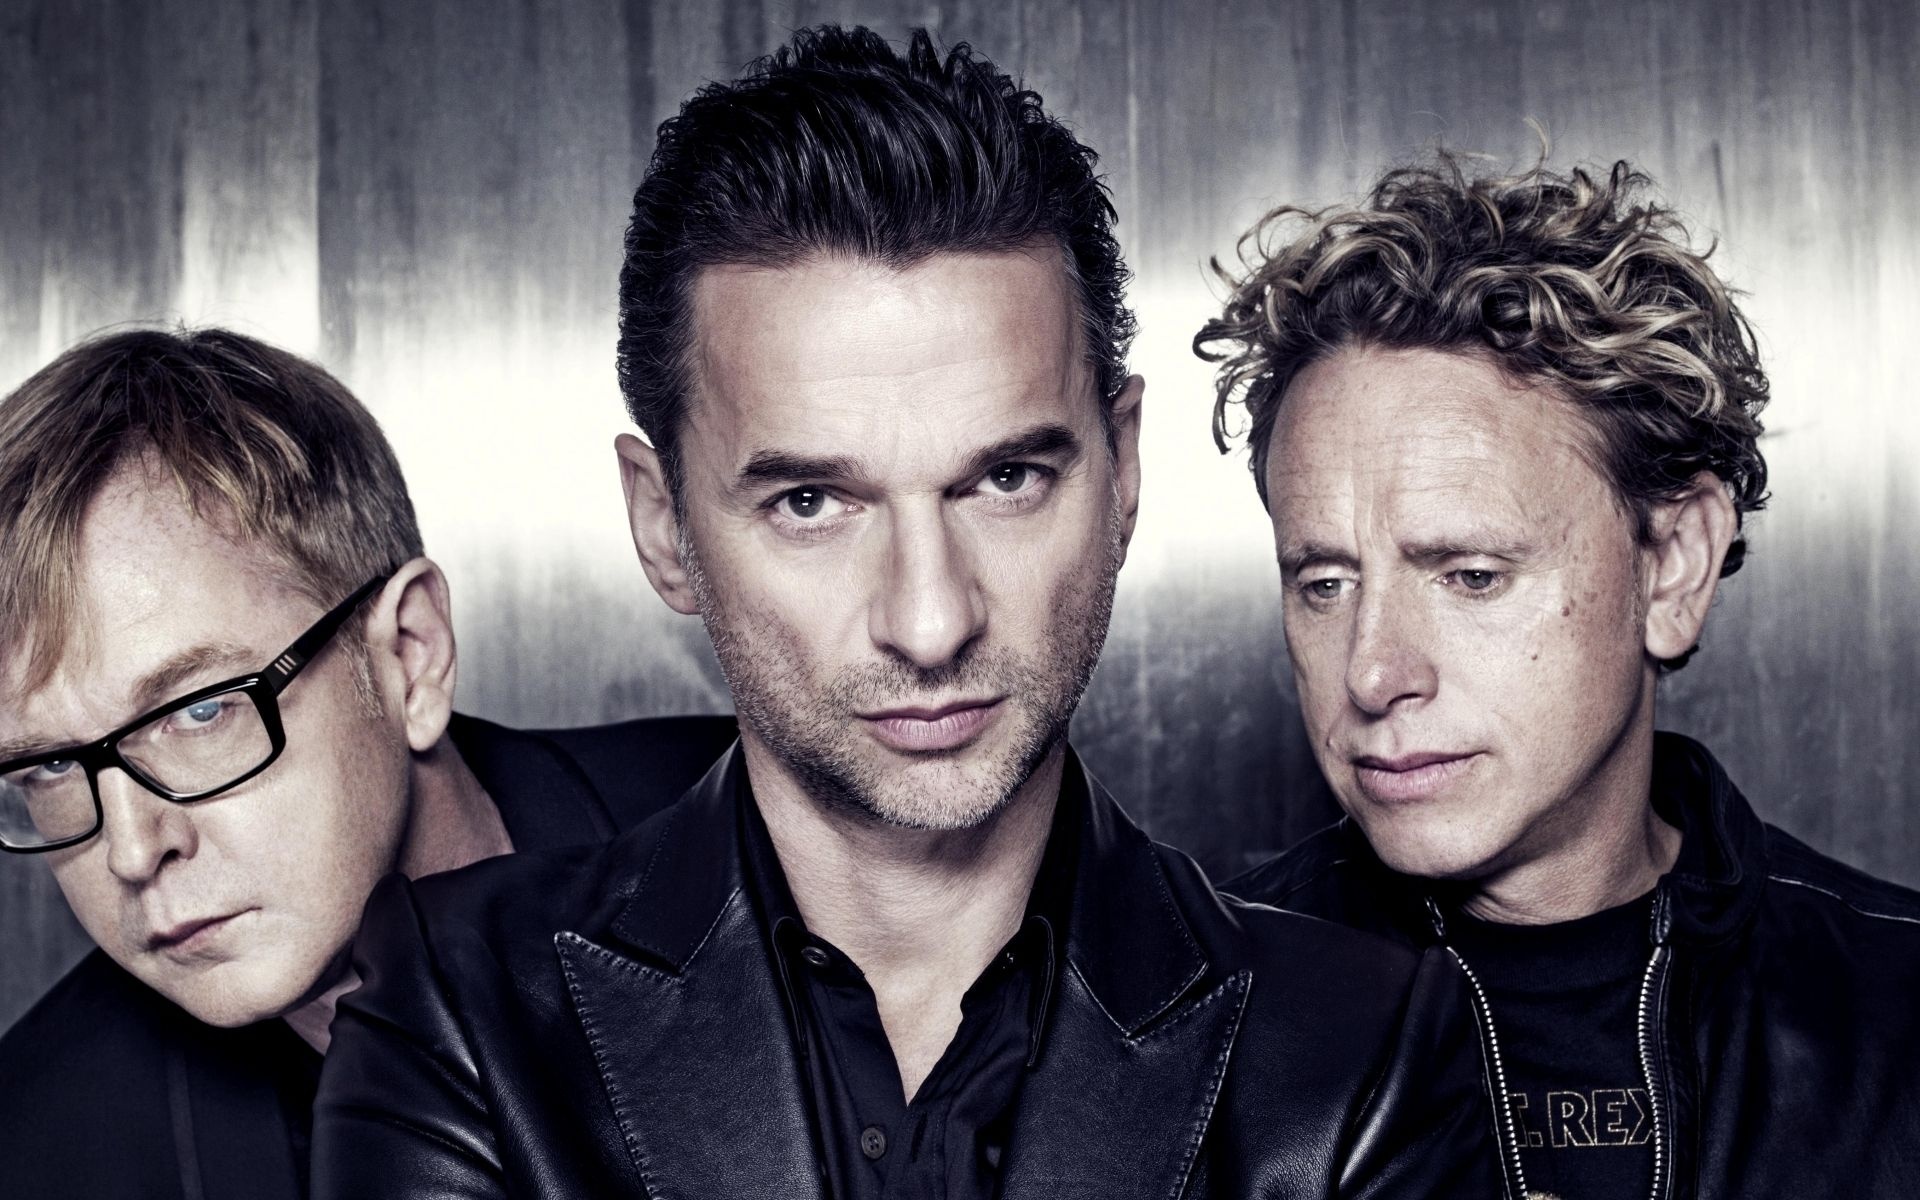 Martin Gore, Depeche Mode wallpapers, HD quality, Band members' portrait, 1920x1200 HD Desktop